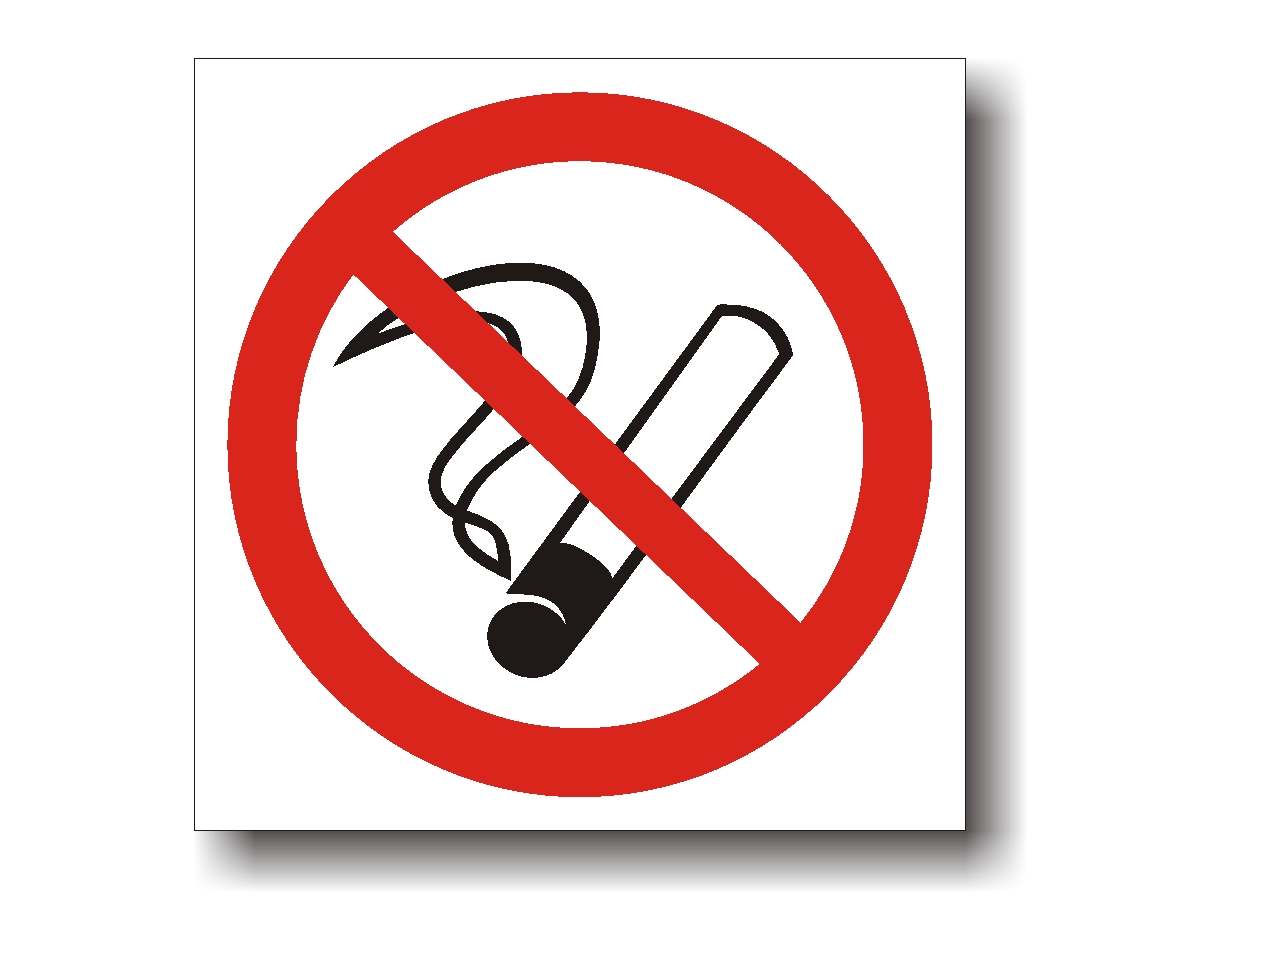 табличка "курение запрещено"